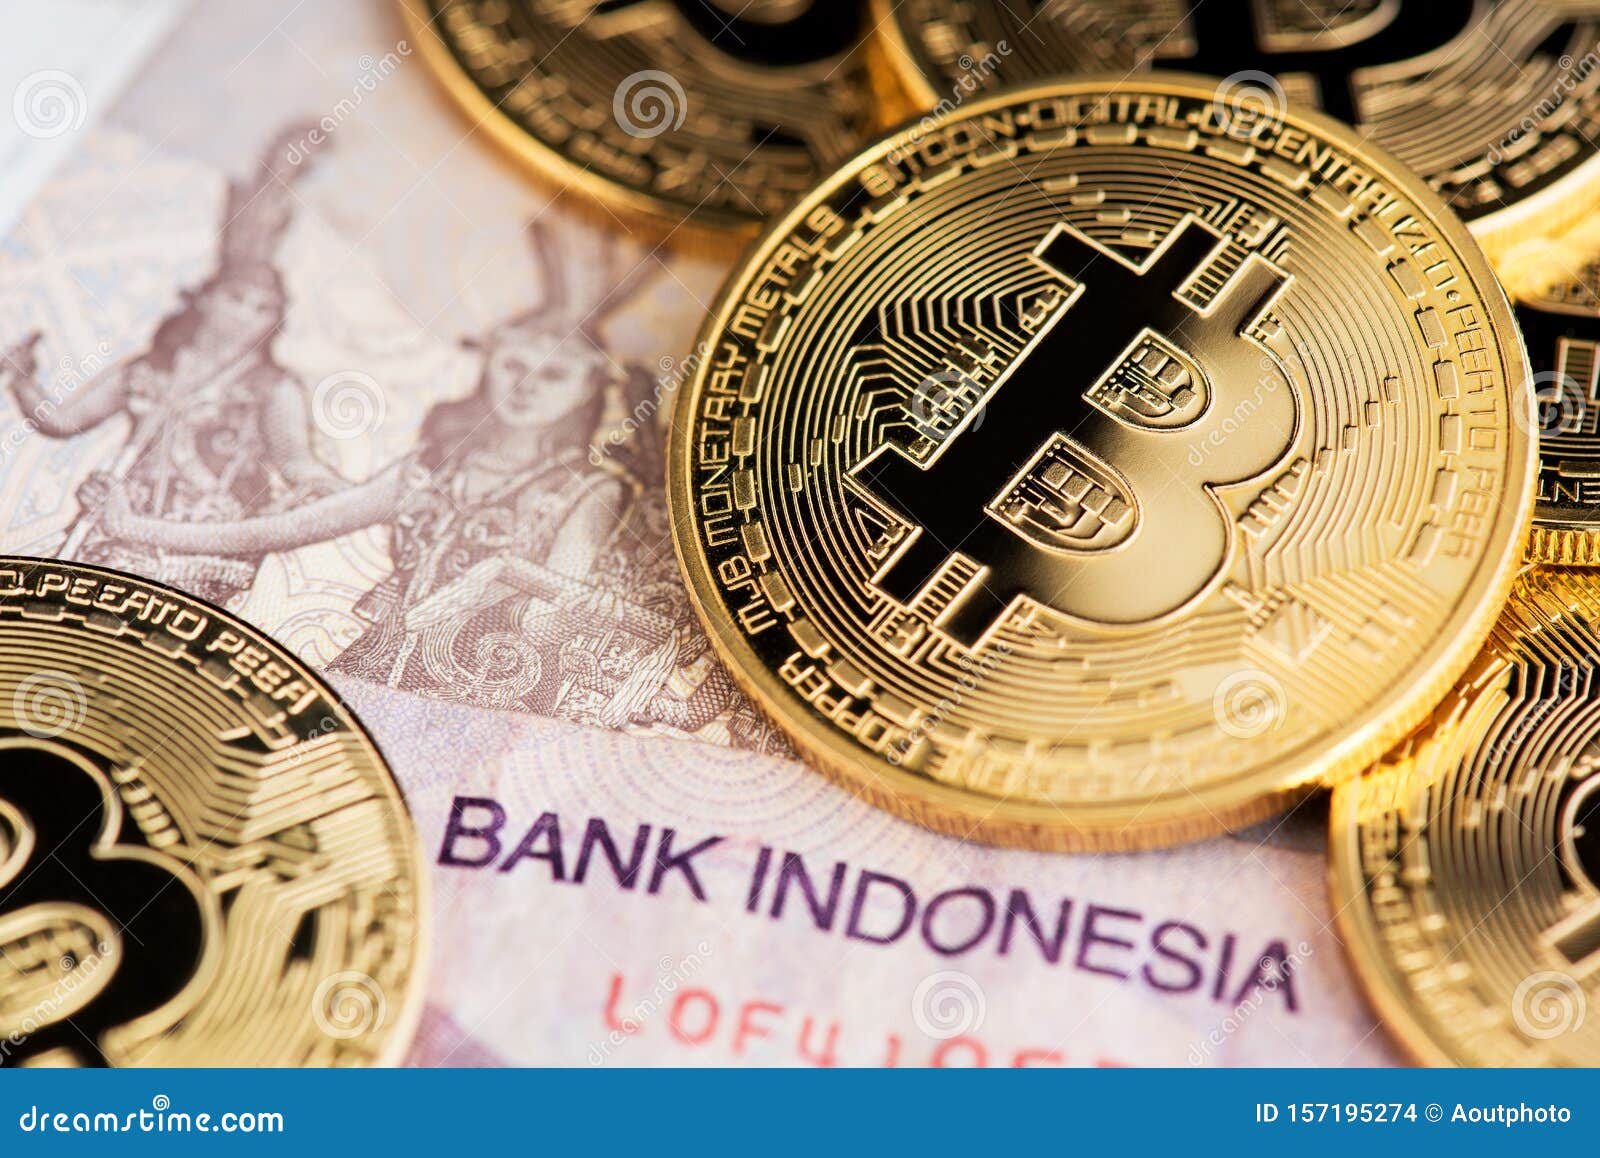 Bitcoin Virtual Money On Indonesia Money Rupiah Banknotes. Stock Photo ...